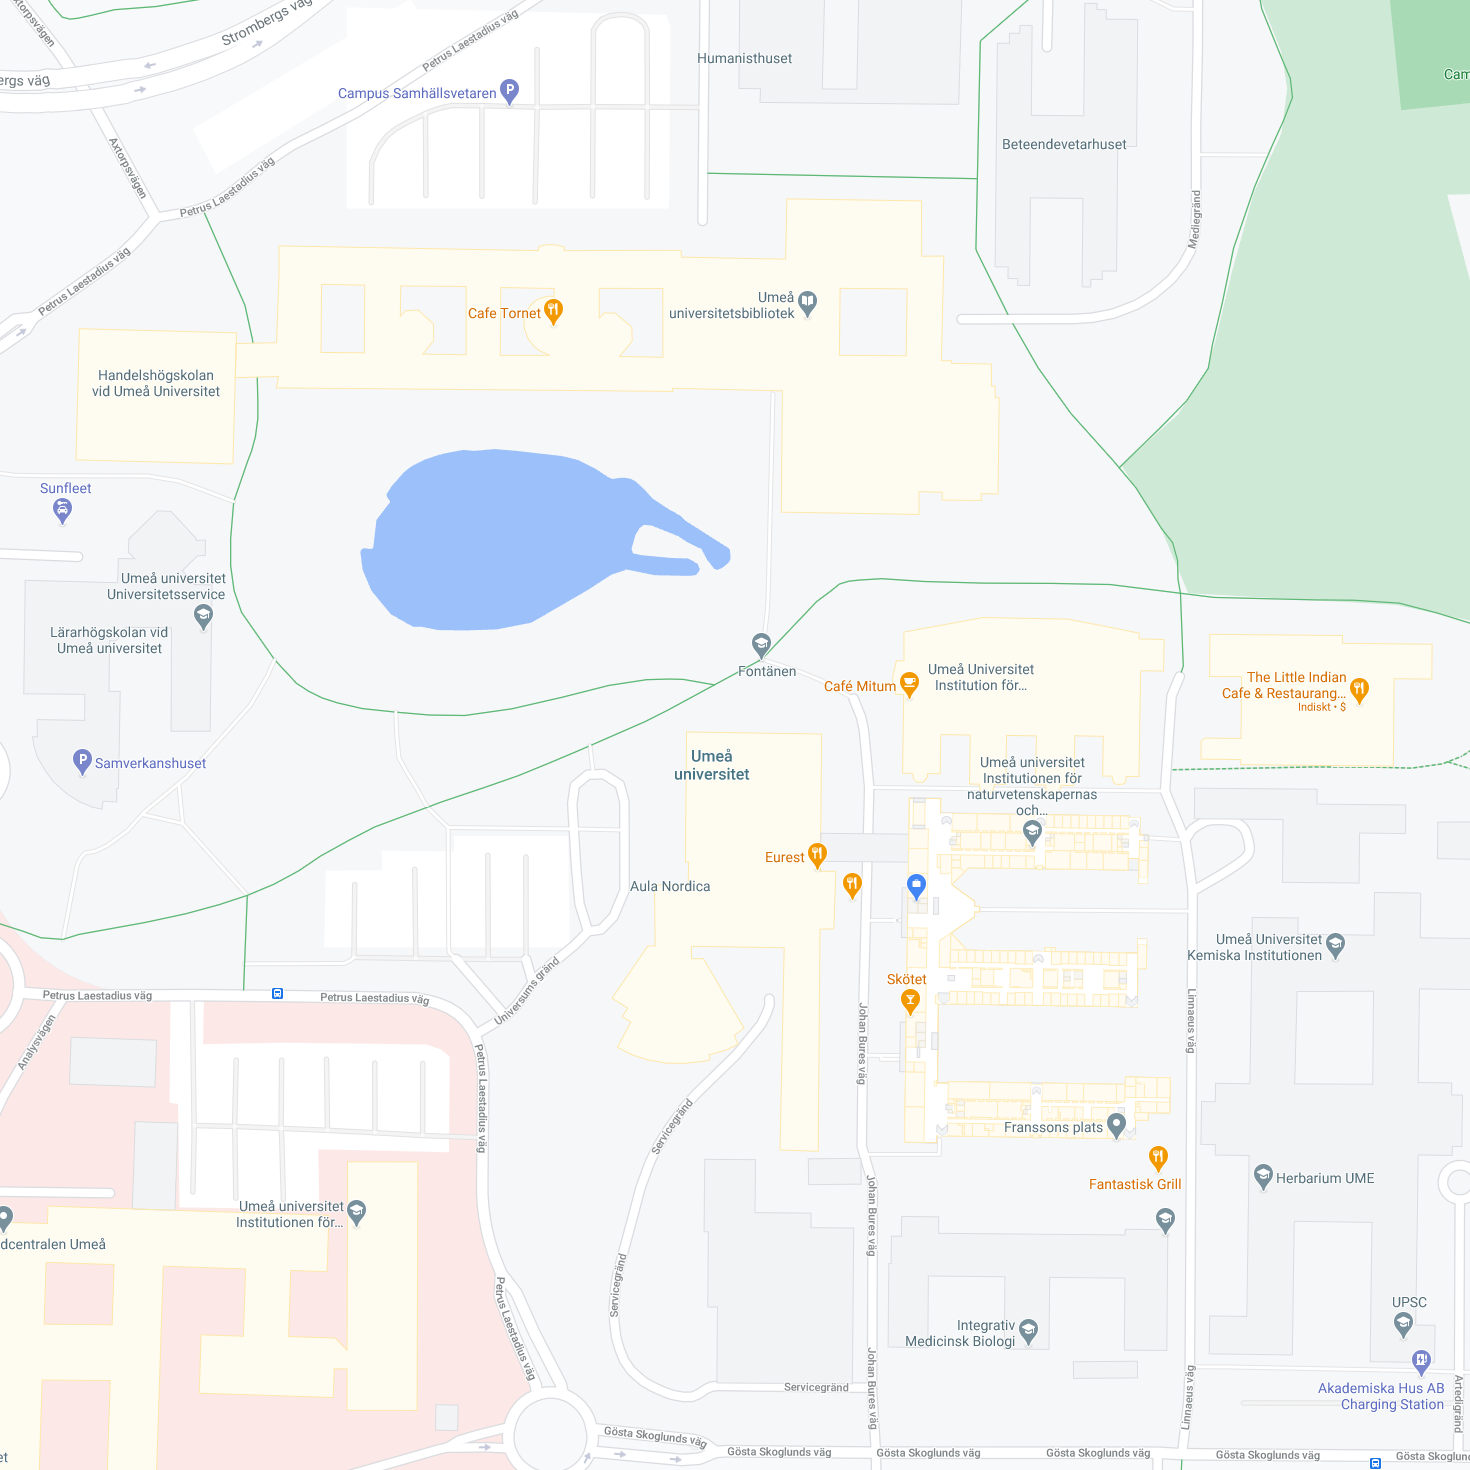 Map over Umeå University